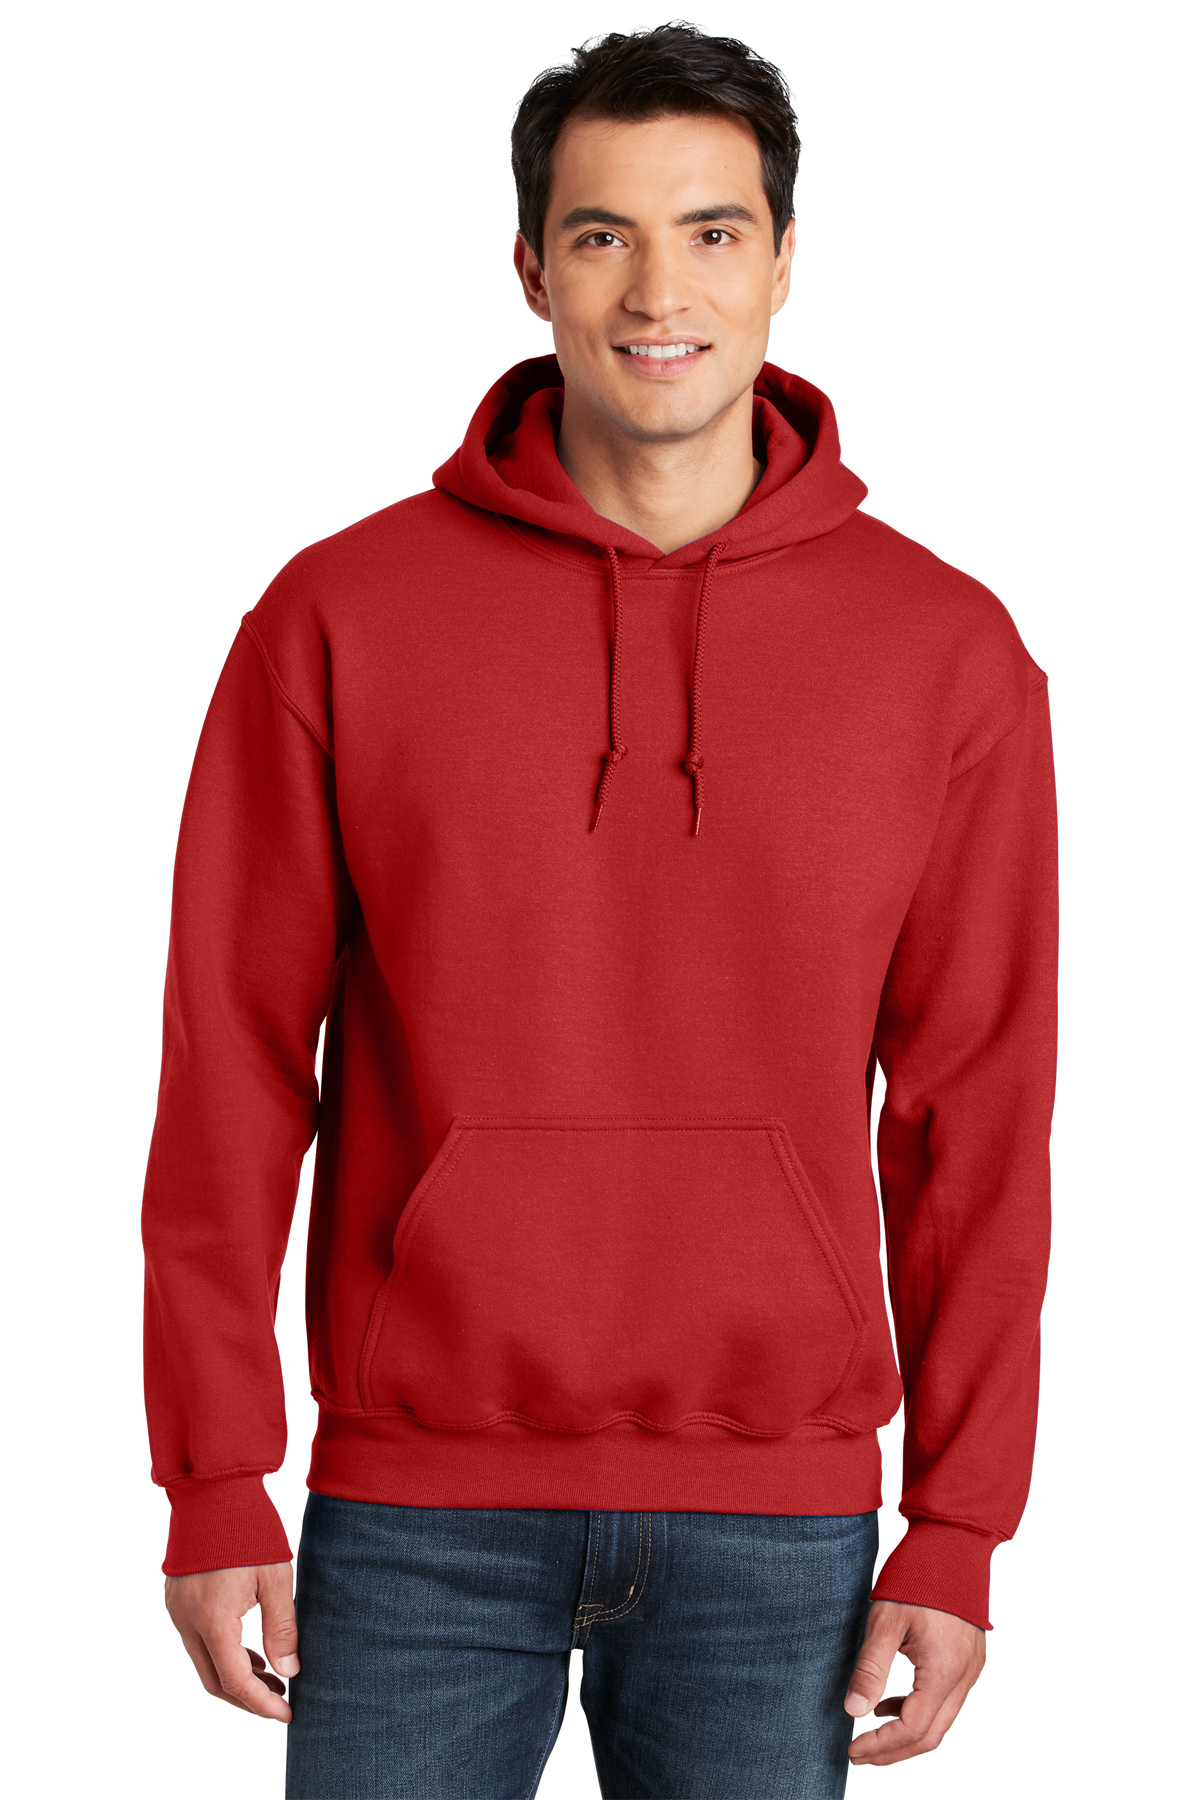 Gildan - SanMar Pullover | Product DryBlend Sweatshirt Hooded 